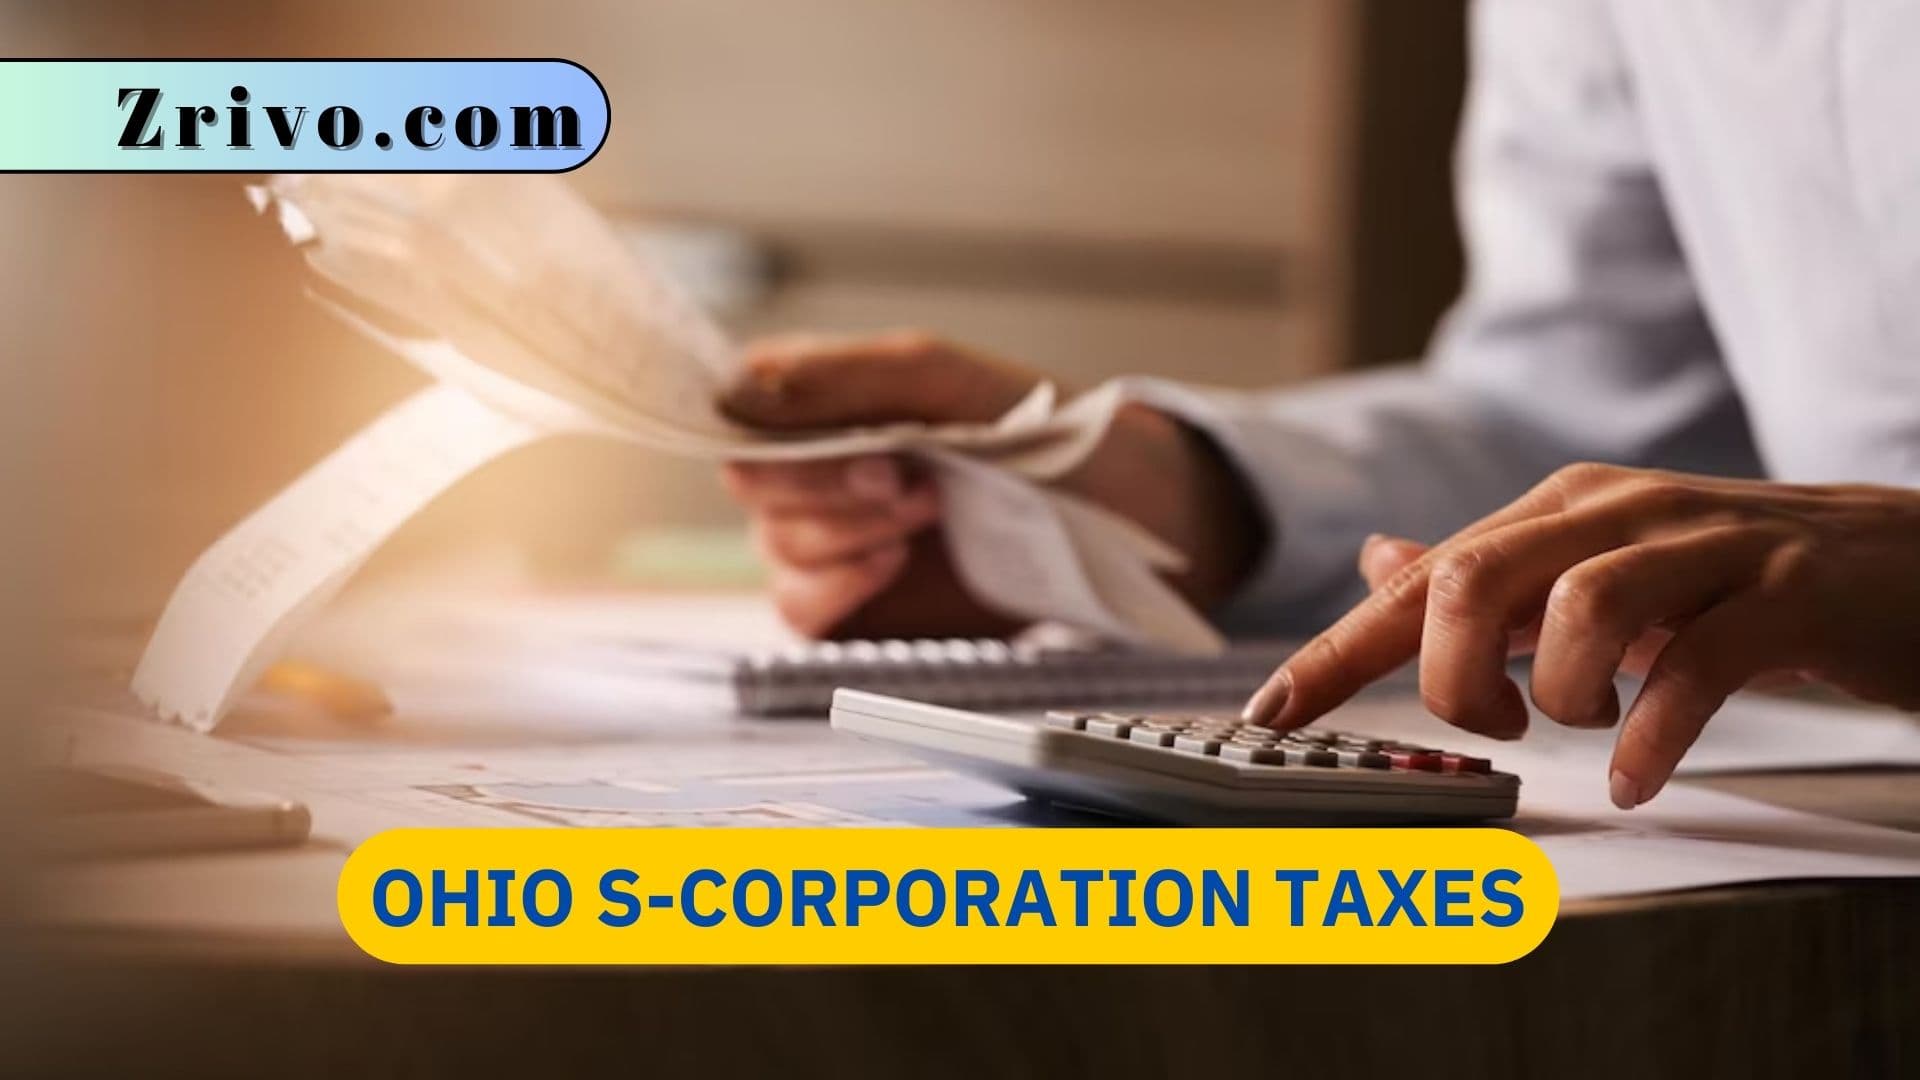 Ohio S-Corporation Taxes